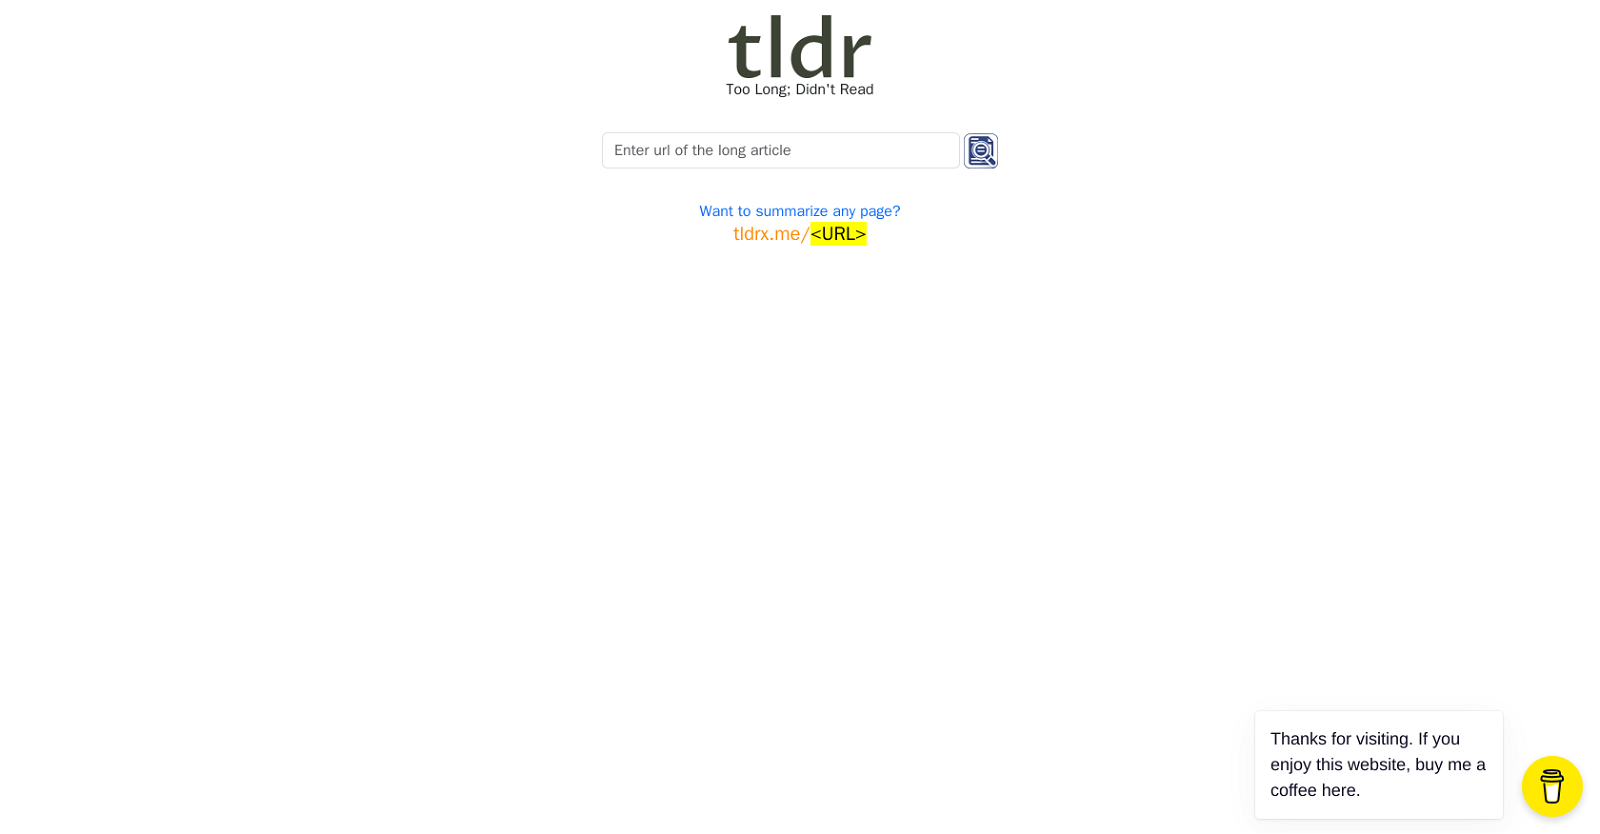 TLDRX website